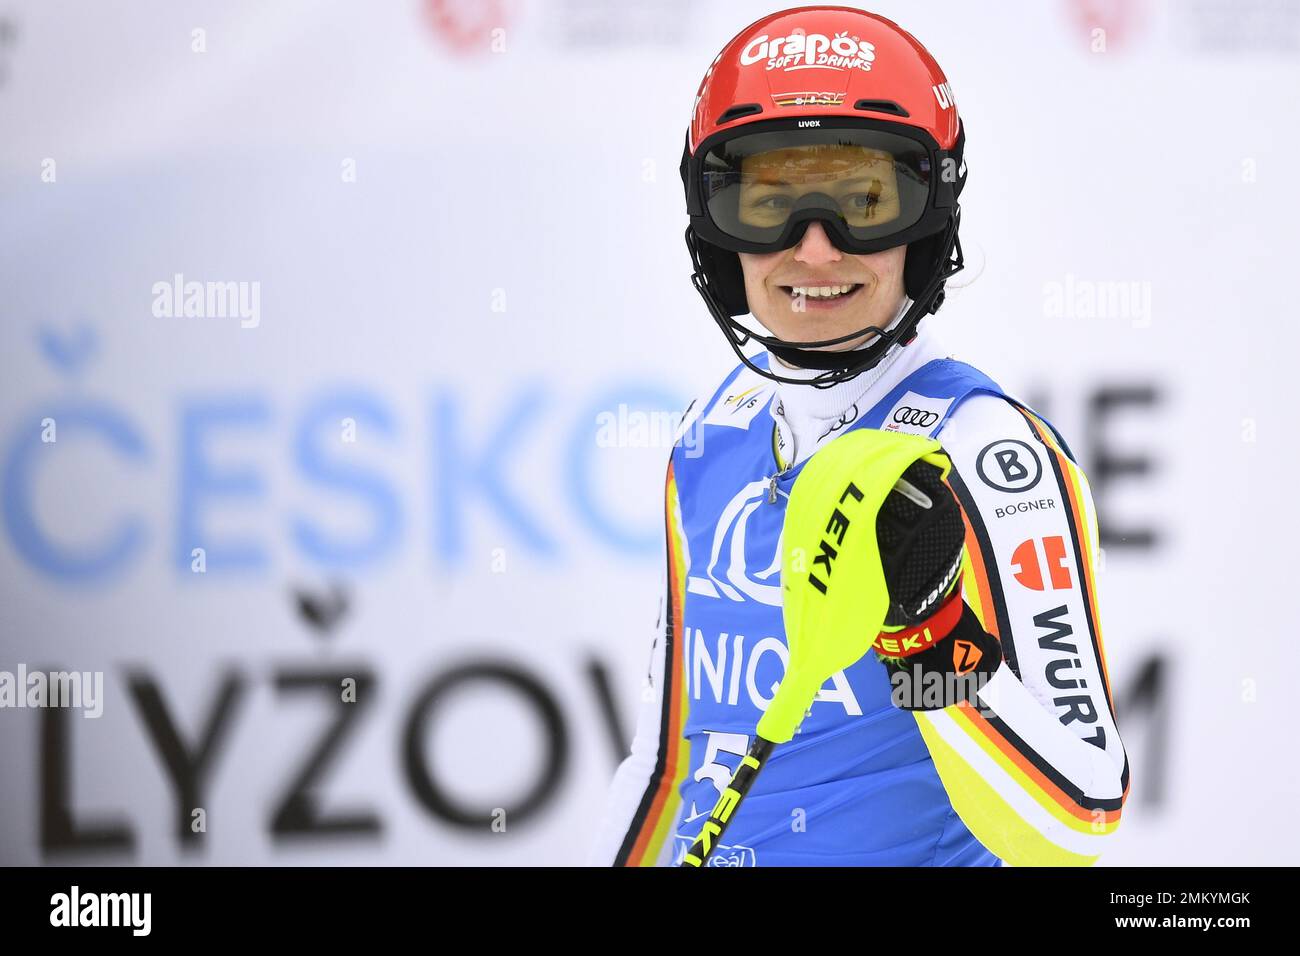 Spindleruv Mlyn, Czech Republic. 29th Jan, 2023. Winner Lena Durr of Germany  after the Alpine Skiing World Cup women's slalom event in Spindleruv Mlyn,  Czech Republic, January 29, 2023. Credit: Radek Petrasek/CTK